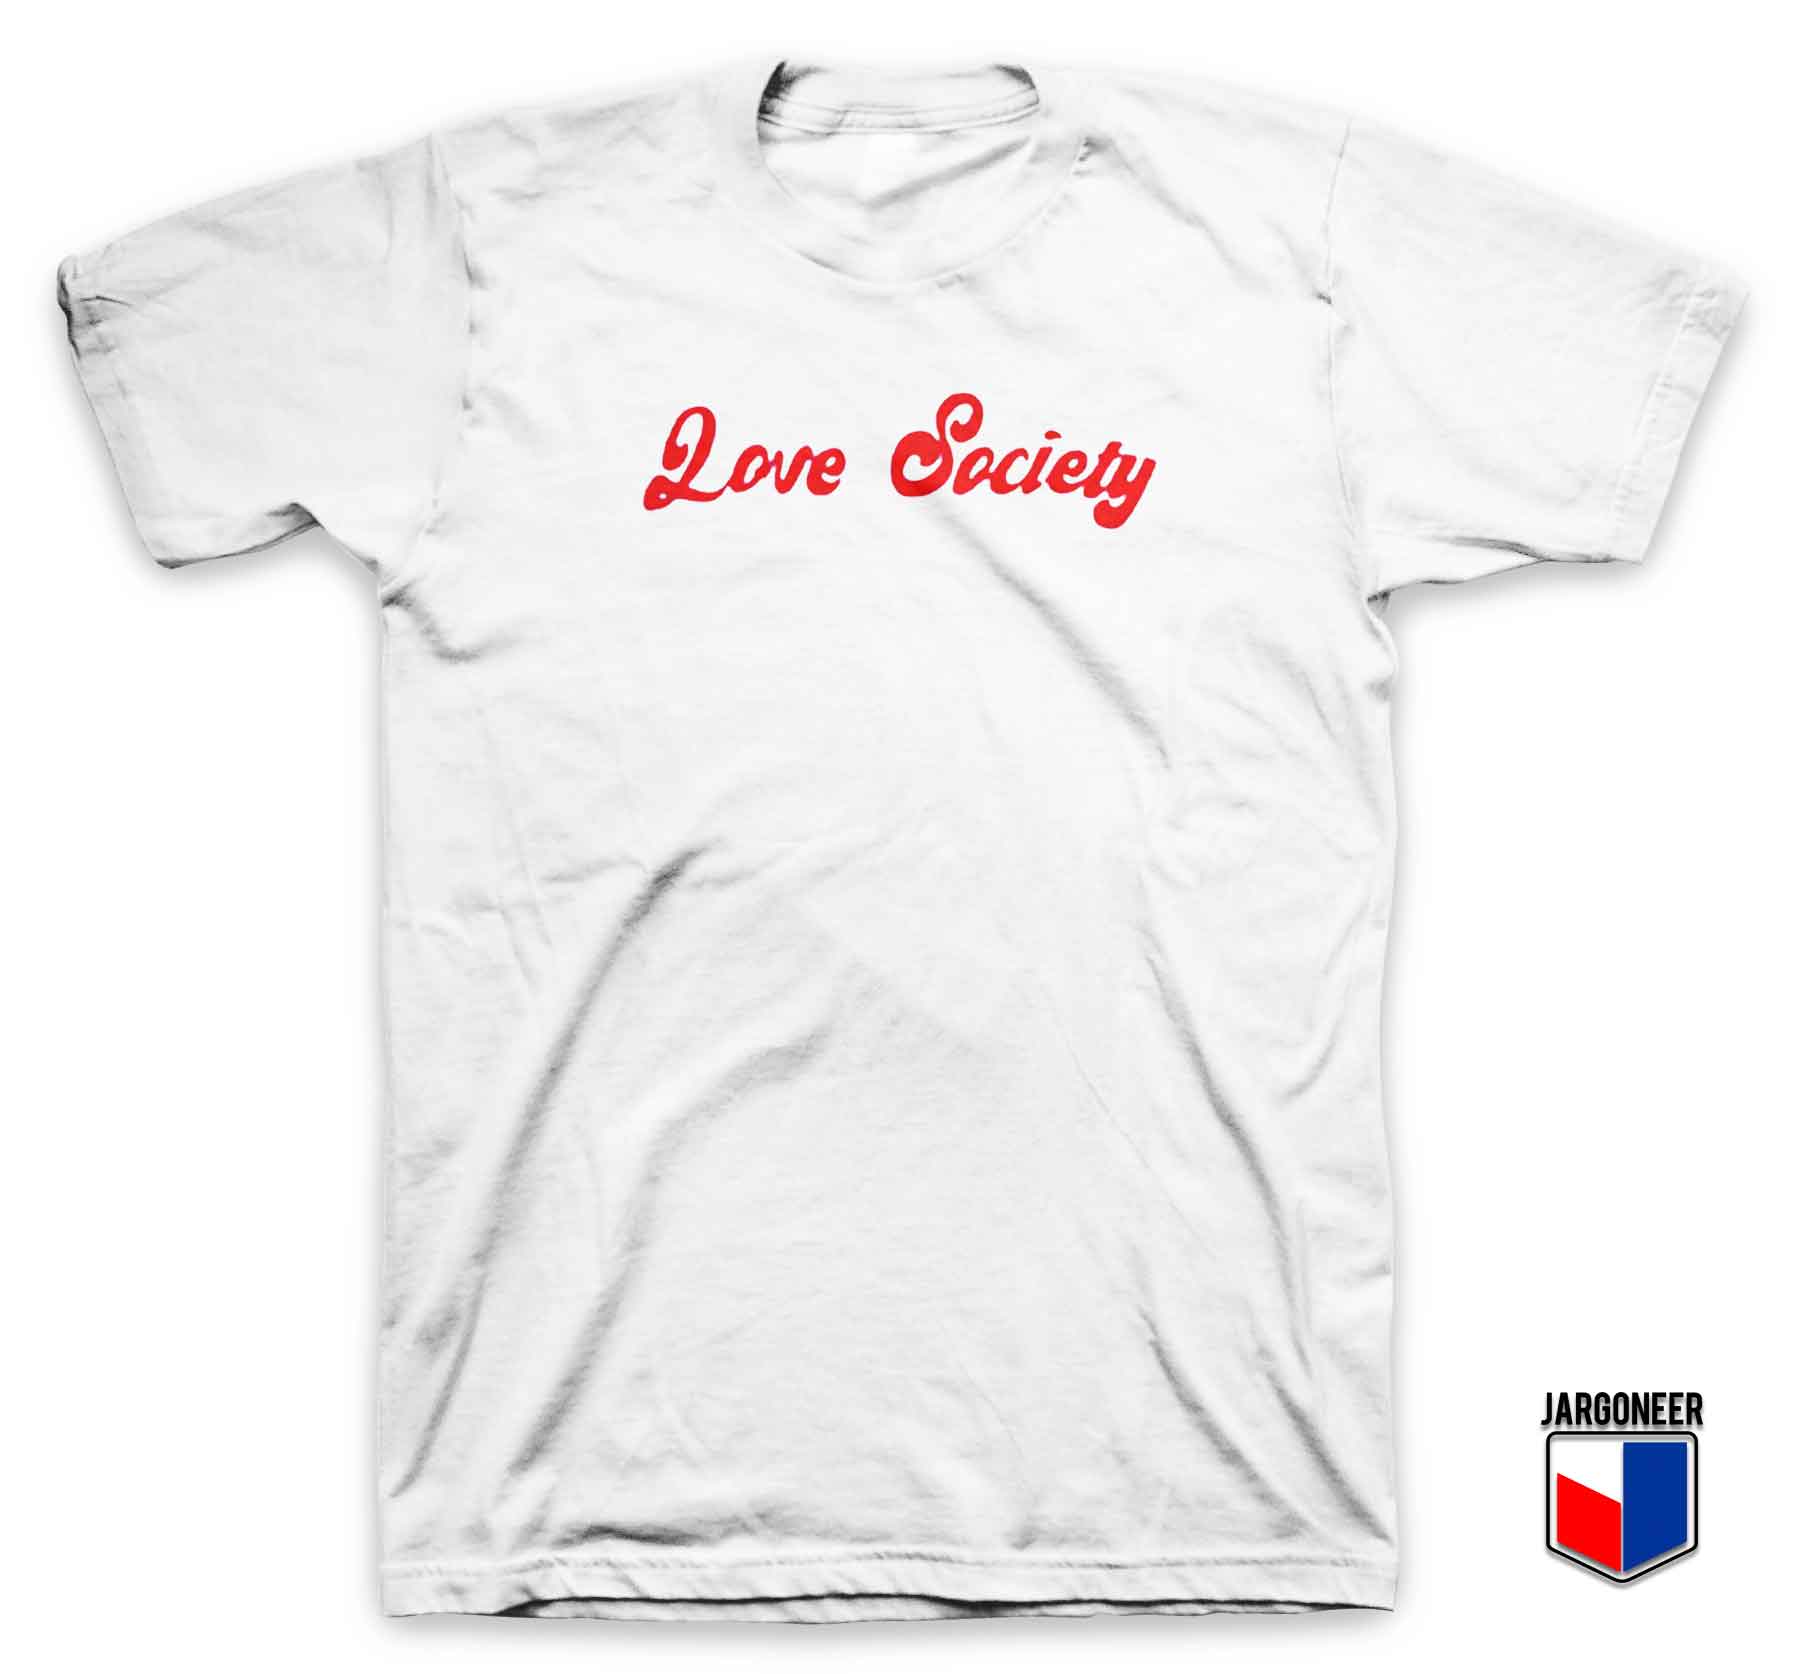 Love Society - Shop Unique Graphic Cool Shirt Designs